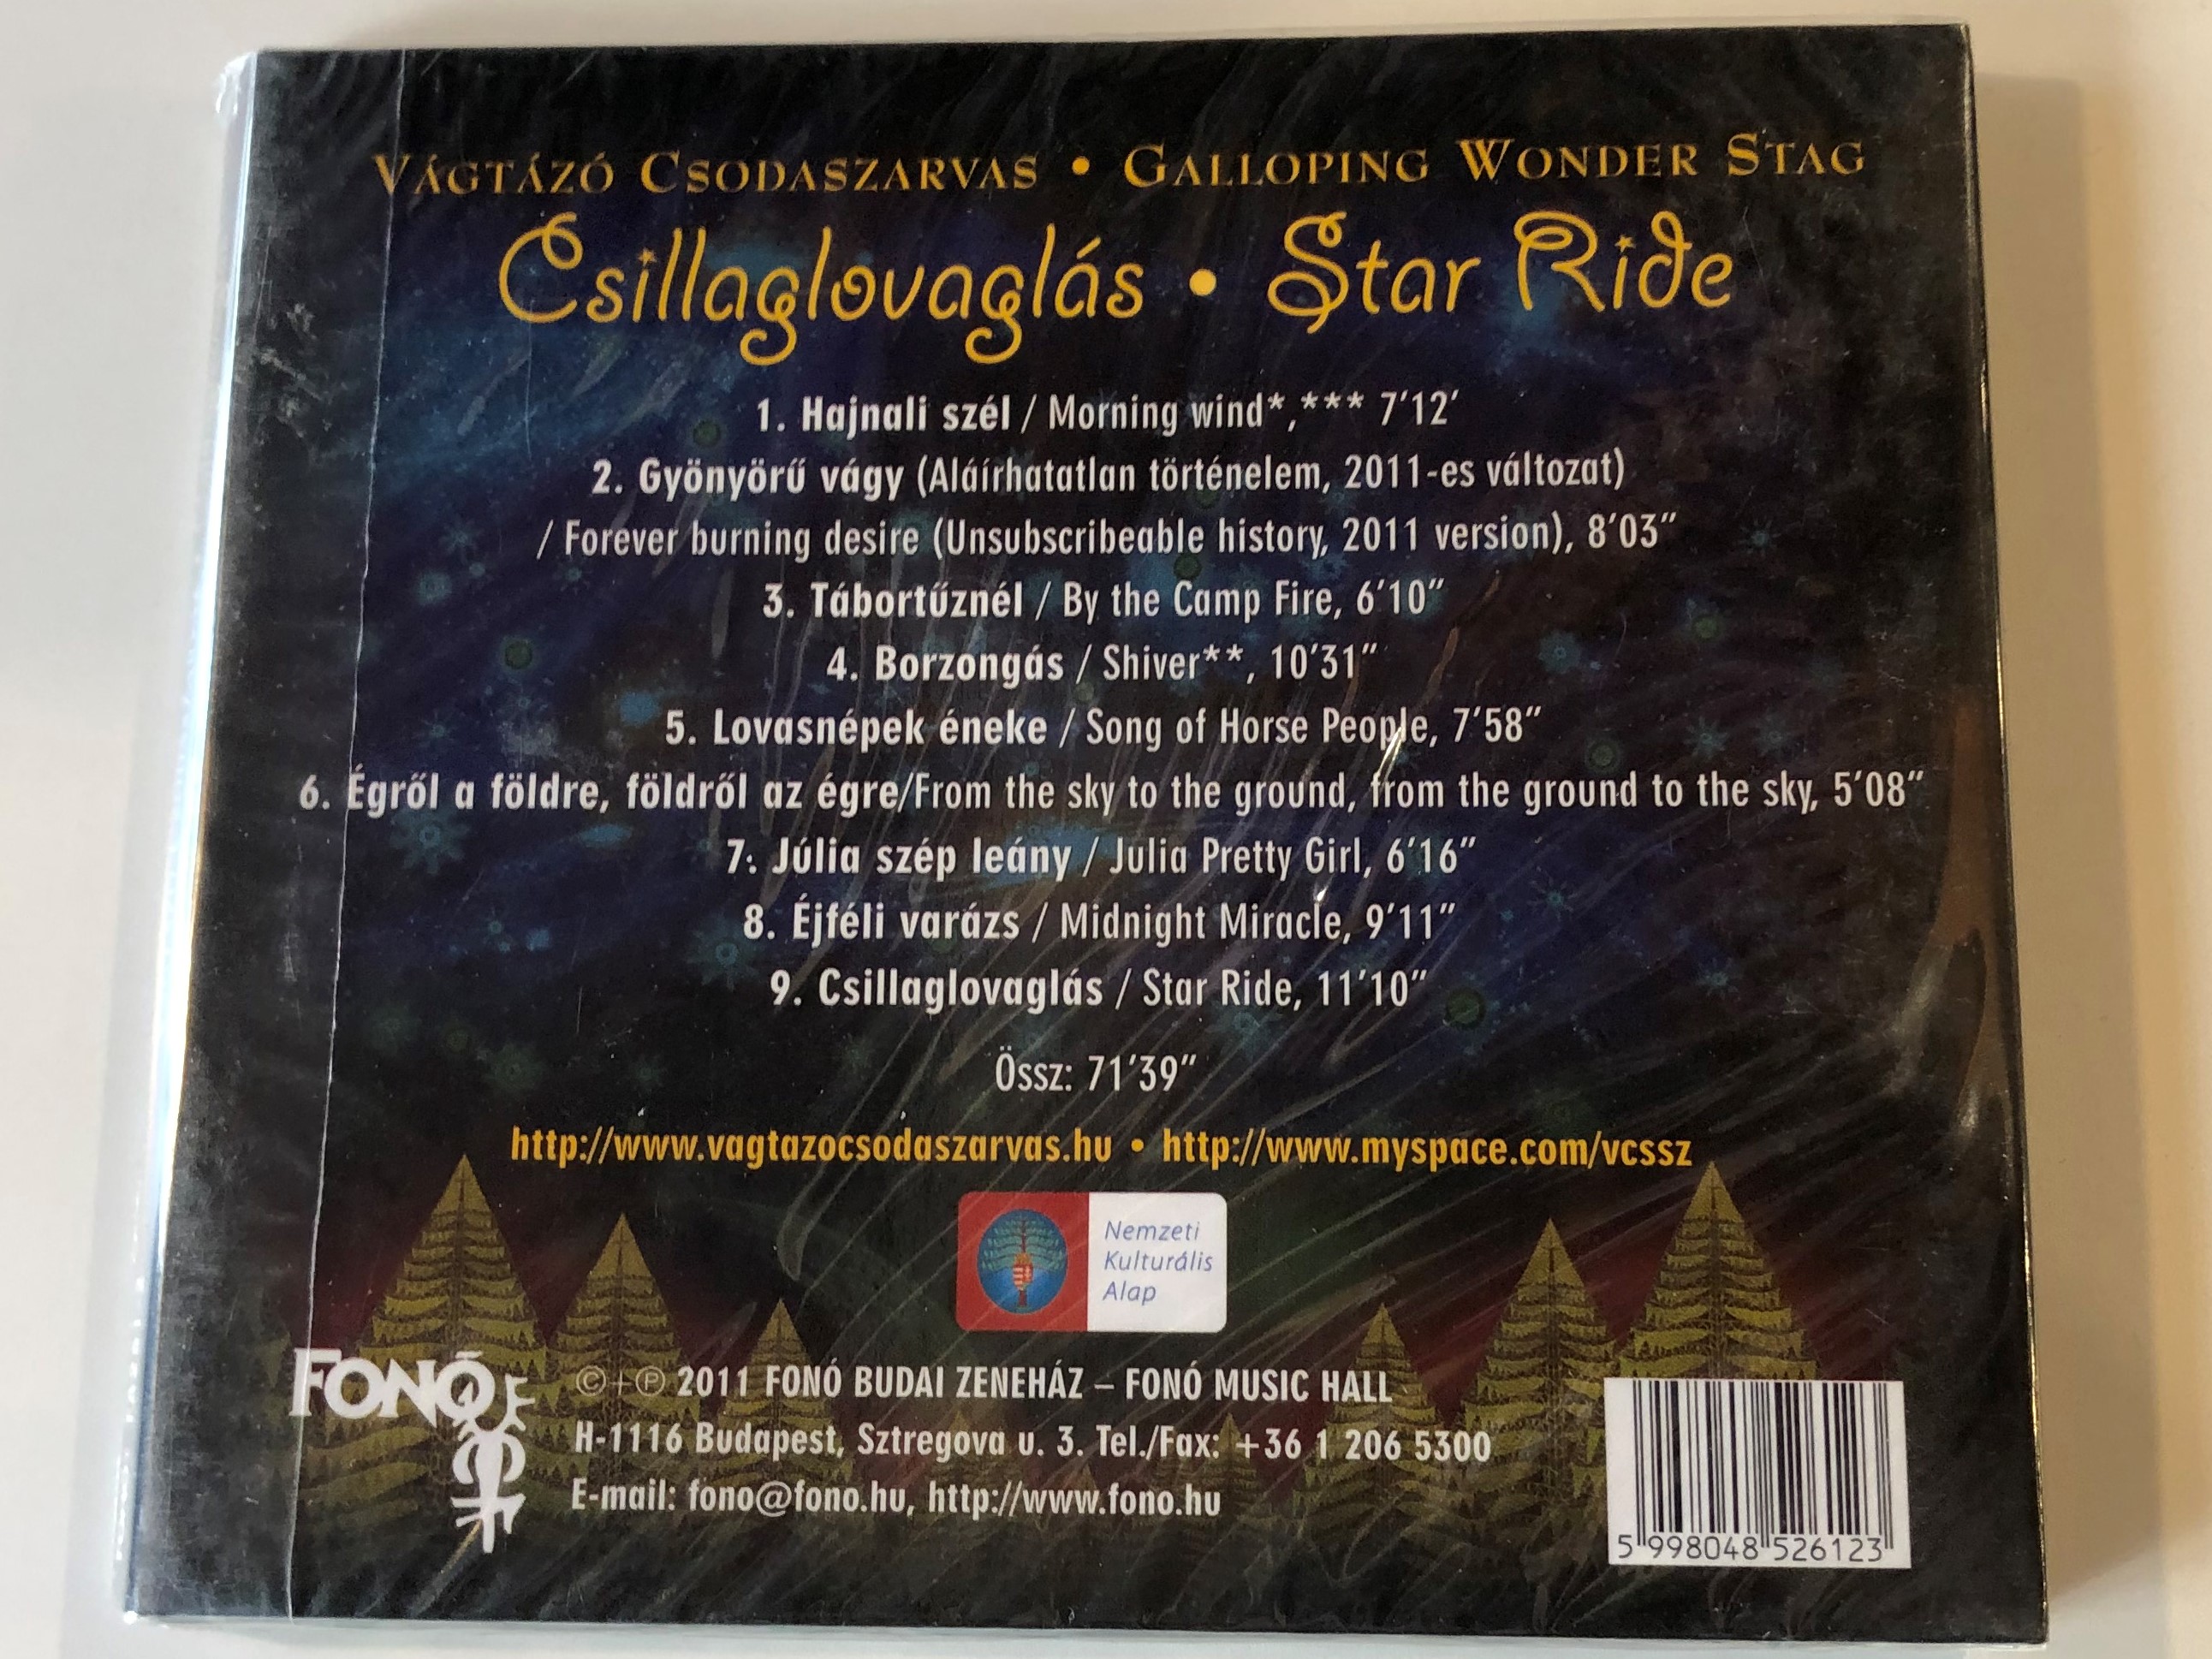 v-gt-z-csodaszarvas-csillaglovagl-s-galloping-wonder-stag-star-ride-fon-records-audio-cd-2011-5998048526123-2-.jpg